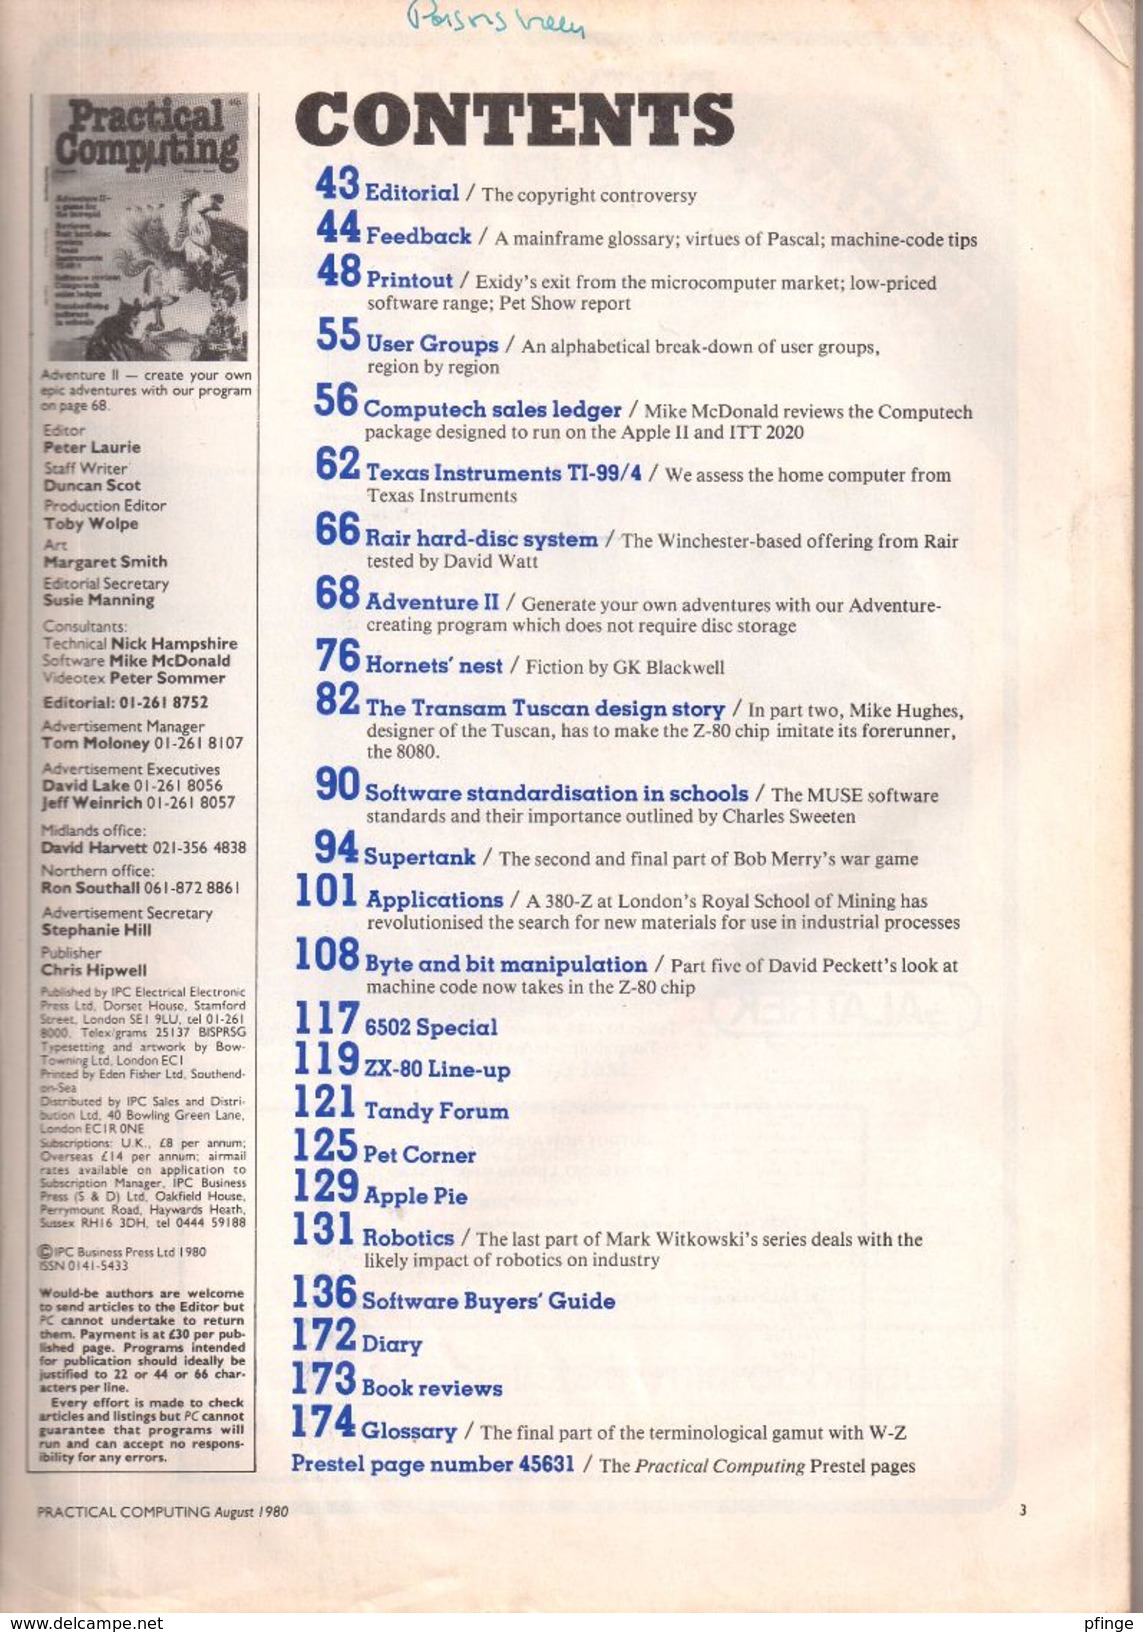 Practical Computing Vol 3 Issue 8, 1980 - Informatica/IT/Internet